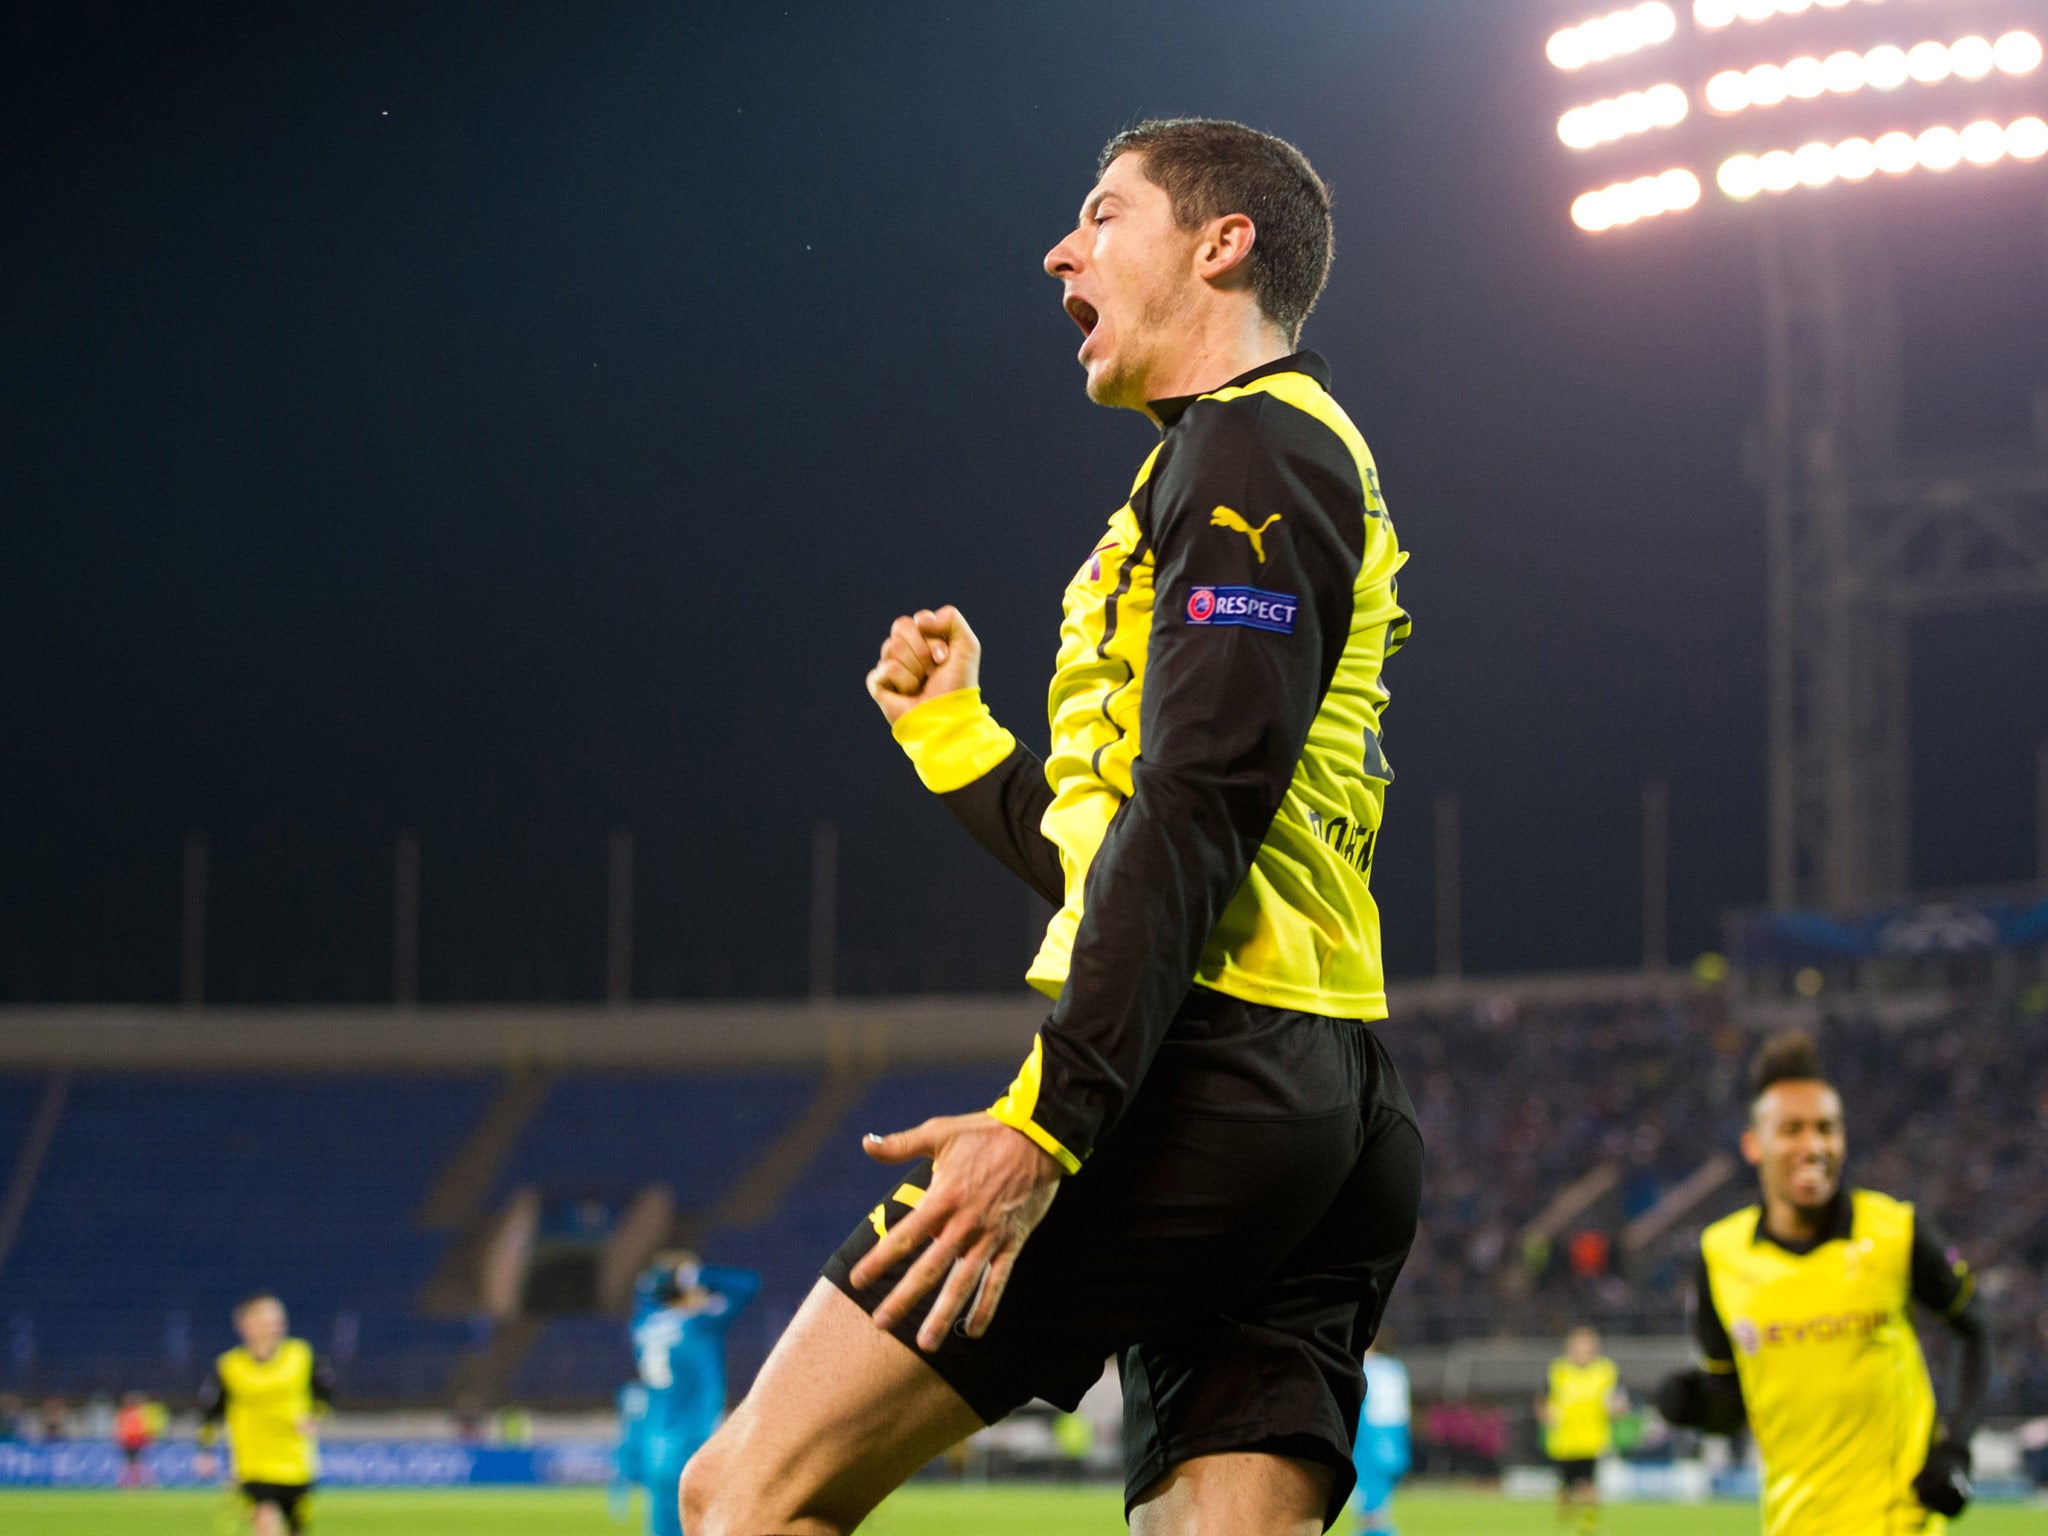 Borussia Dortmund's Robert Lewandowski celebrates after scoring a goal against Zenit Saint Petersburg during their UEFA Champions League Champions League last 16, first-leg football match